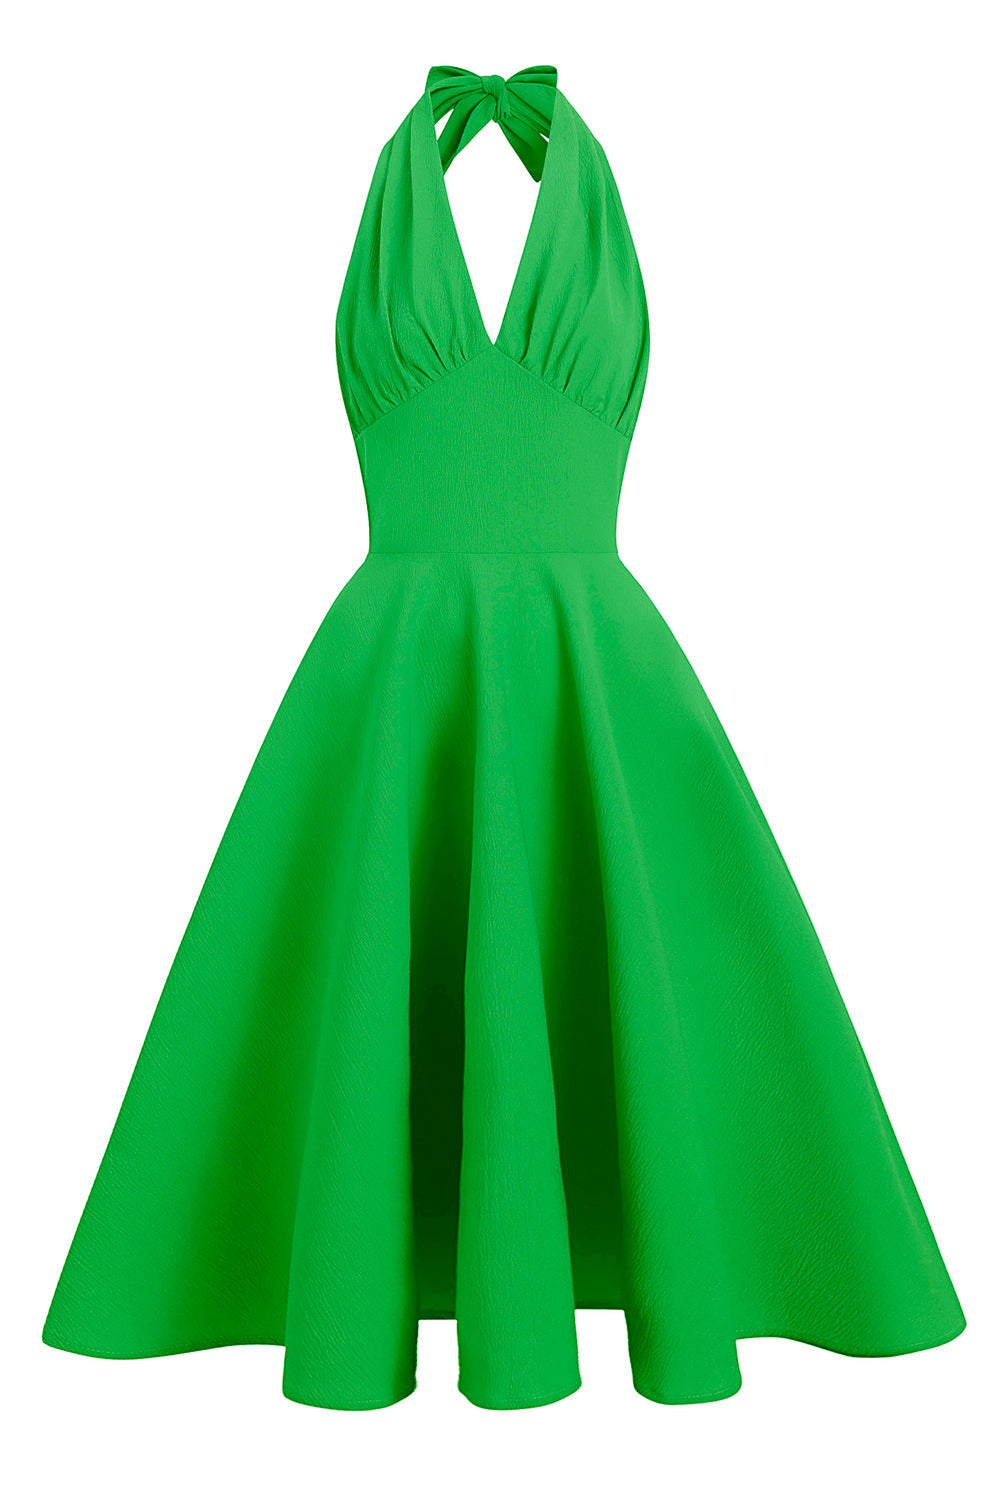 Green Pin Up Vintage 1950s Dress